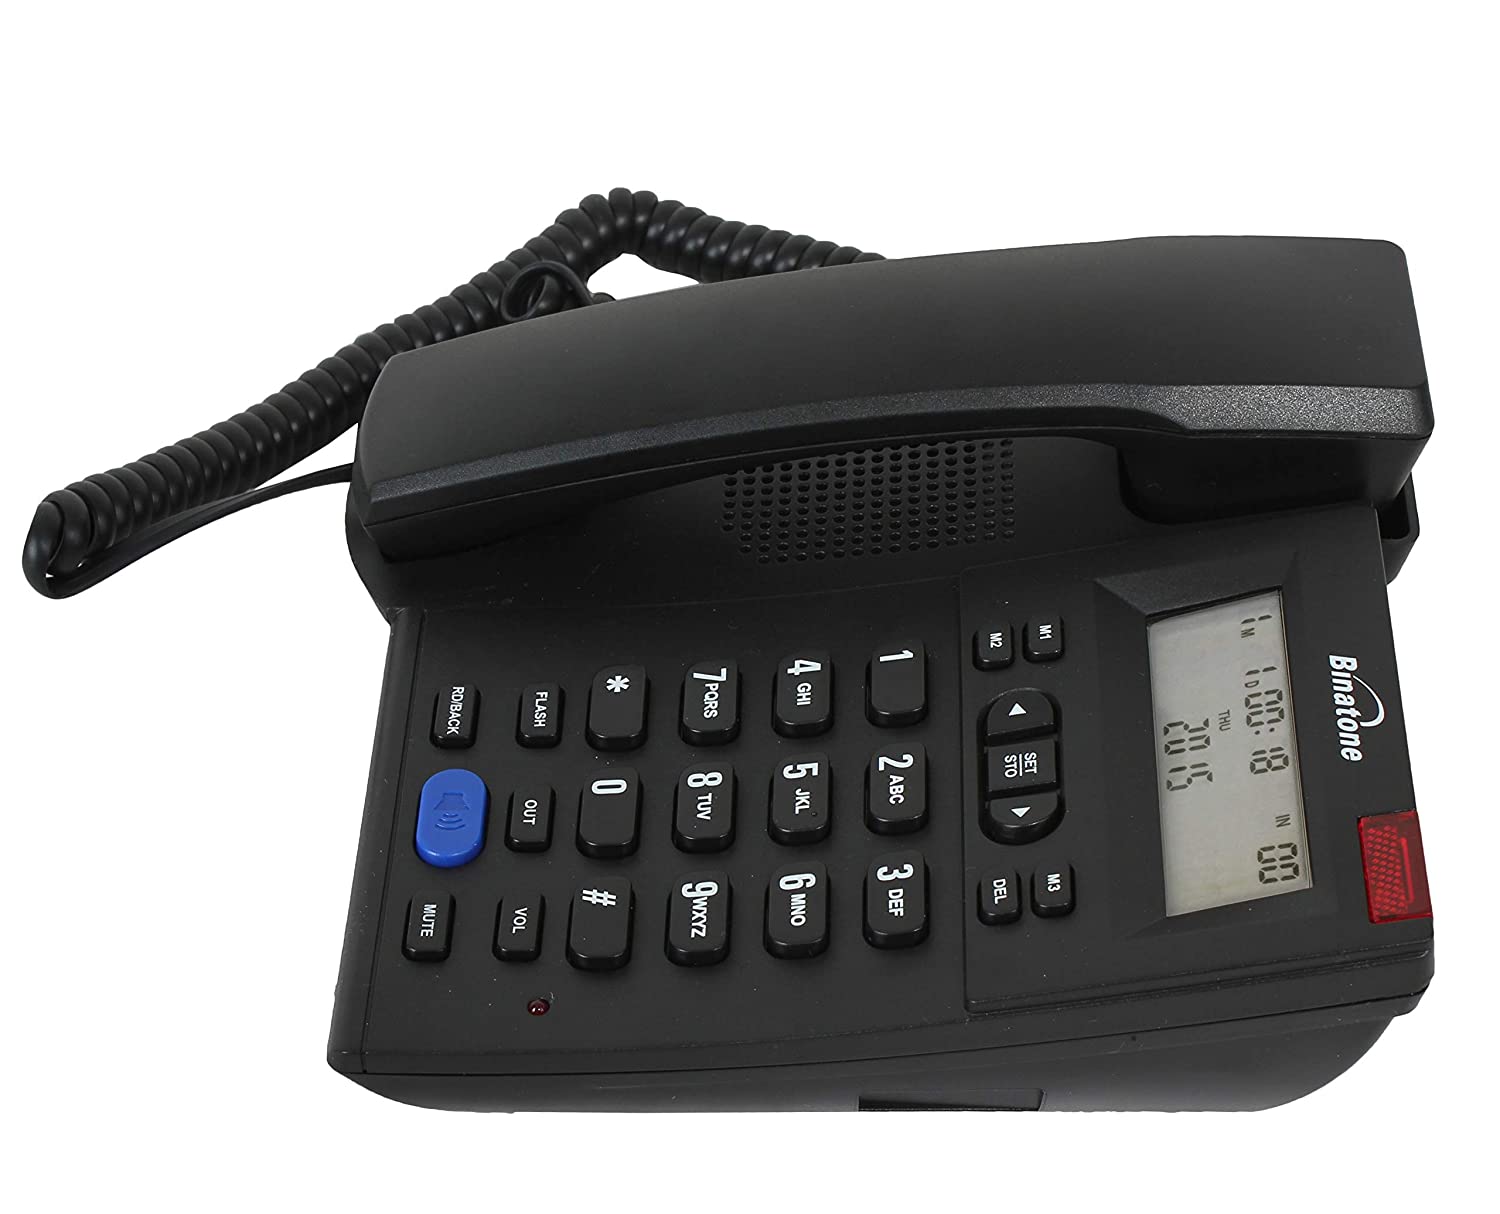 Binatone Concept 700 Corded Landline Phone